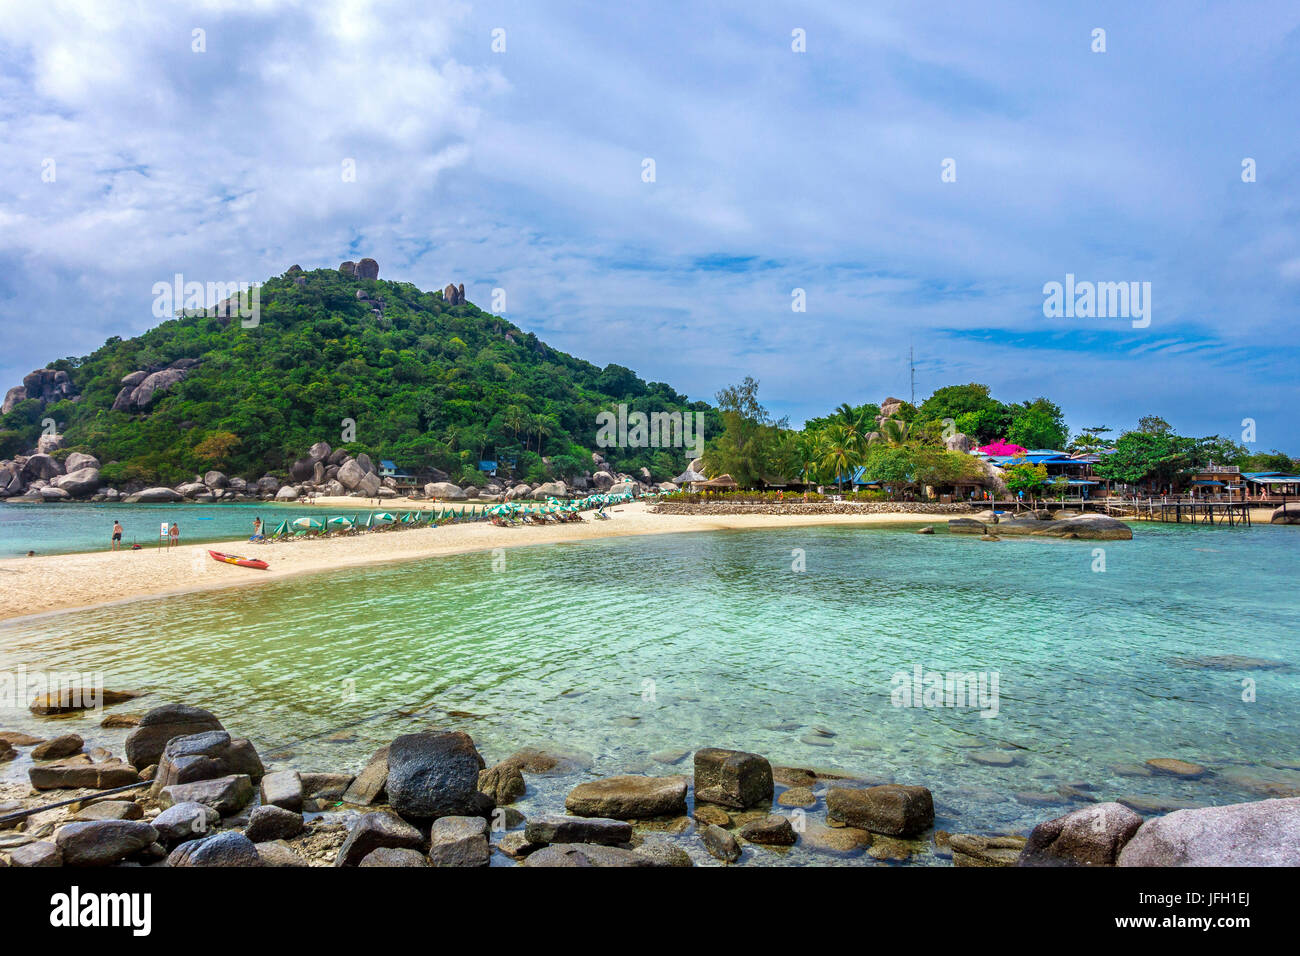 Insel Koh Nang Yuan, auch Nangyuan mit Koh Tao, Golf von Thailand, Thailand, Asien Stockfoto